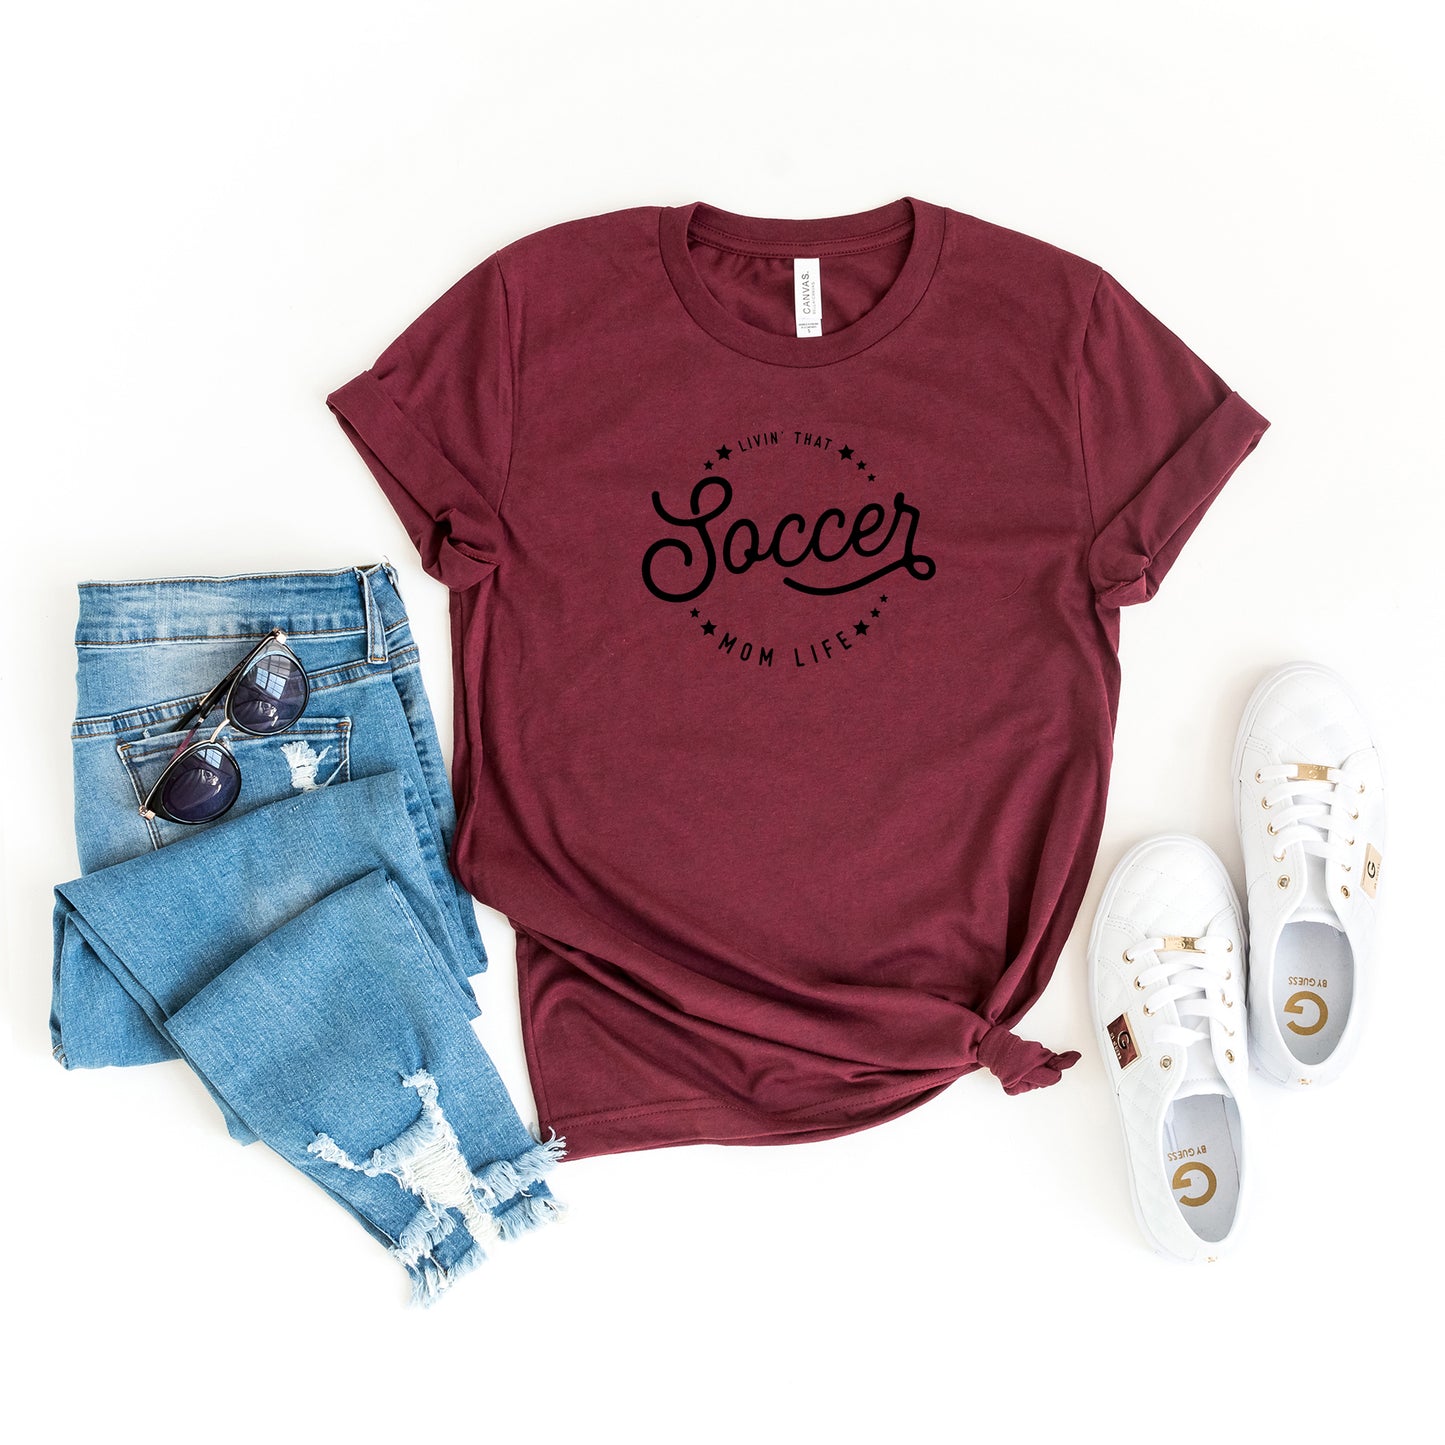 Livin' That Soccer Mom Life | Short Sleeve Graphic Tee